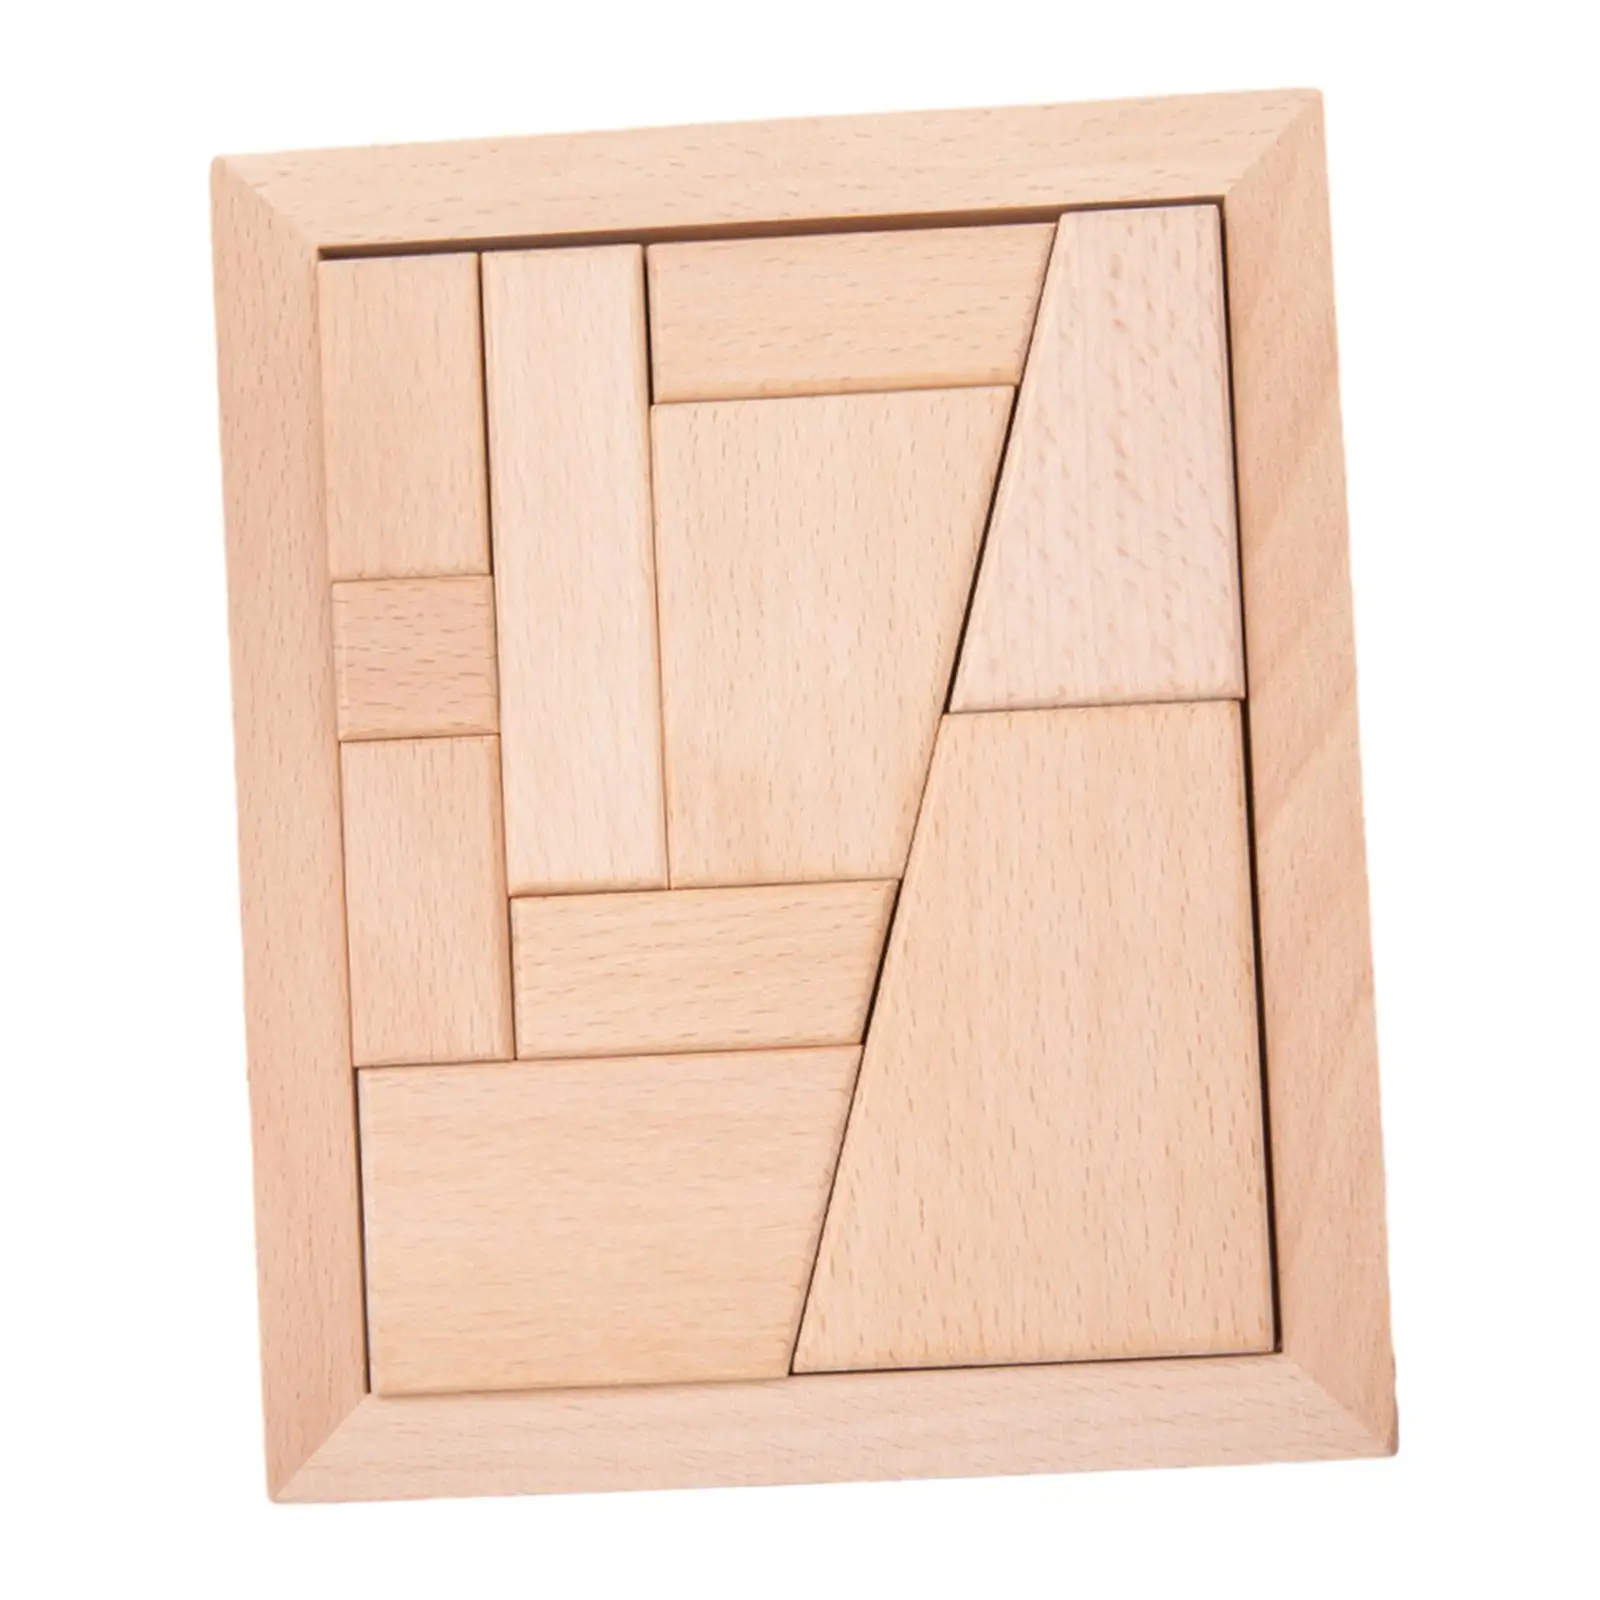 Tangram Wooden Puzzle Teaching Aids Adults Puzzles Games Geometric Shape Jigsaw Puzzle for Children Boys Preschool Girls Kids